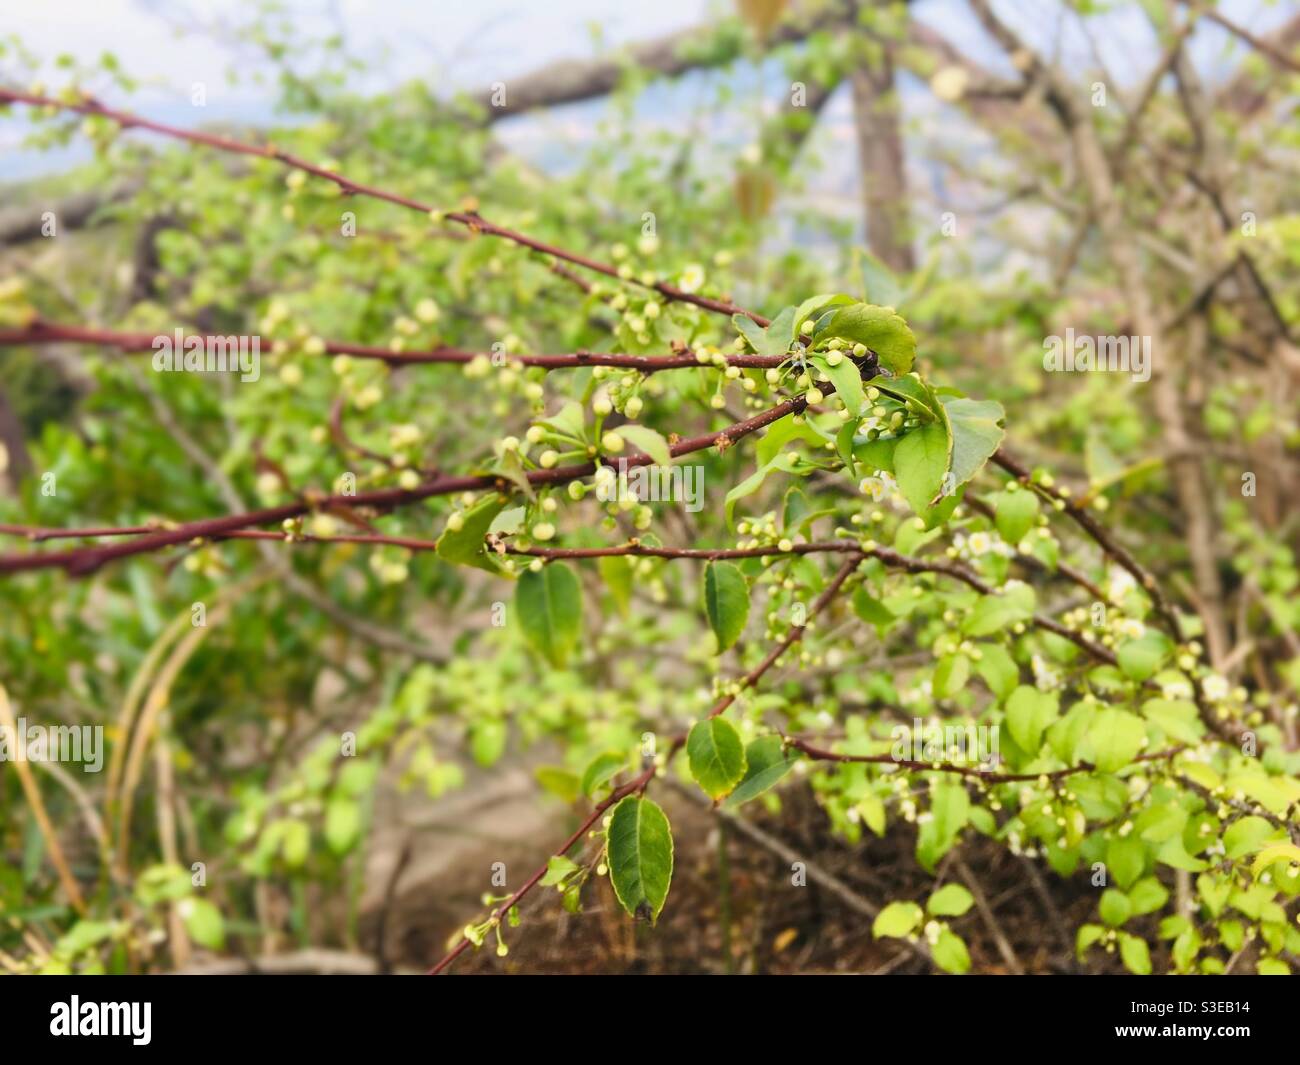 Leafy plants Stock Photo